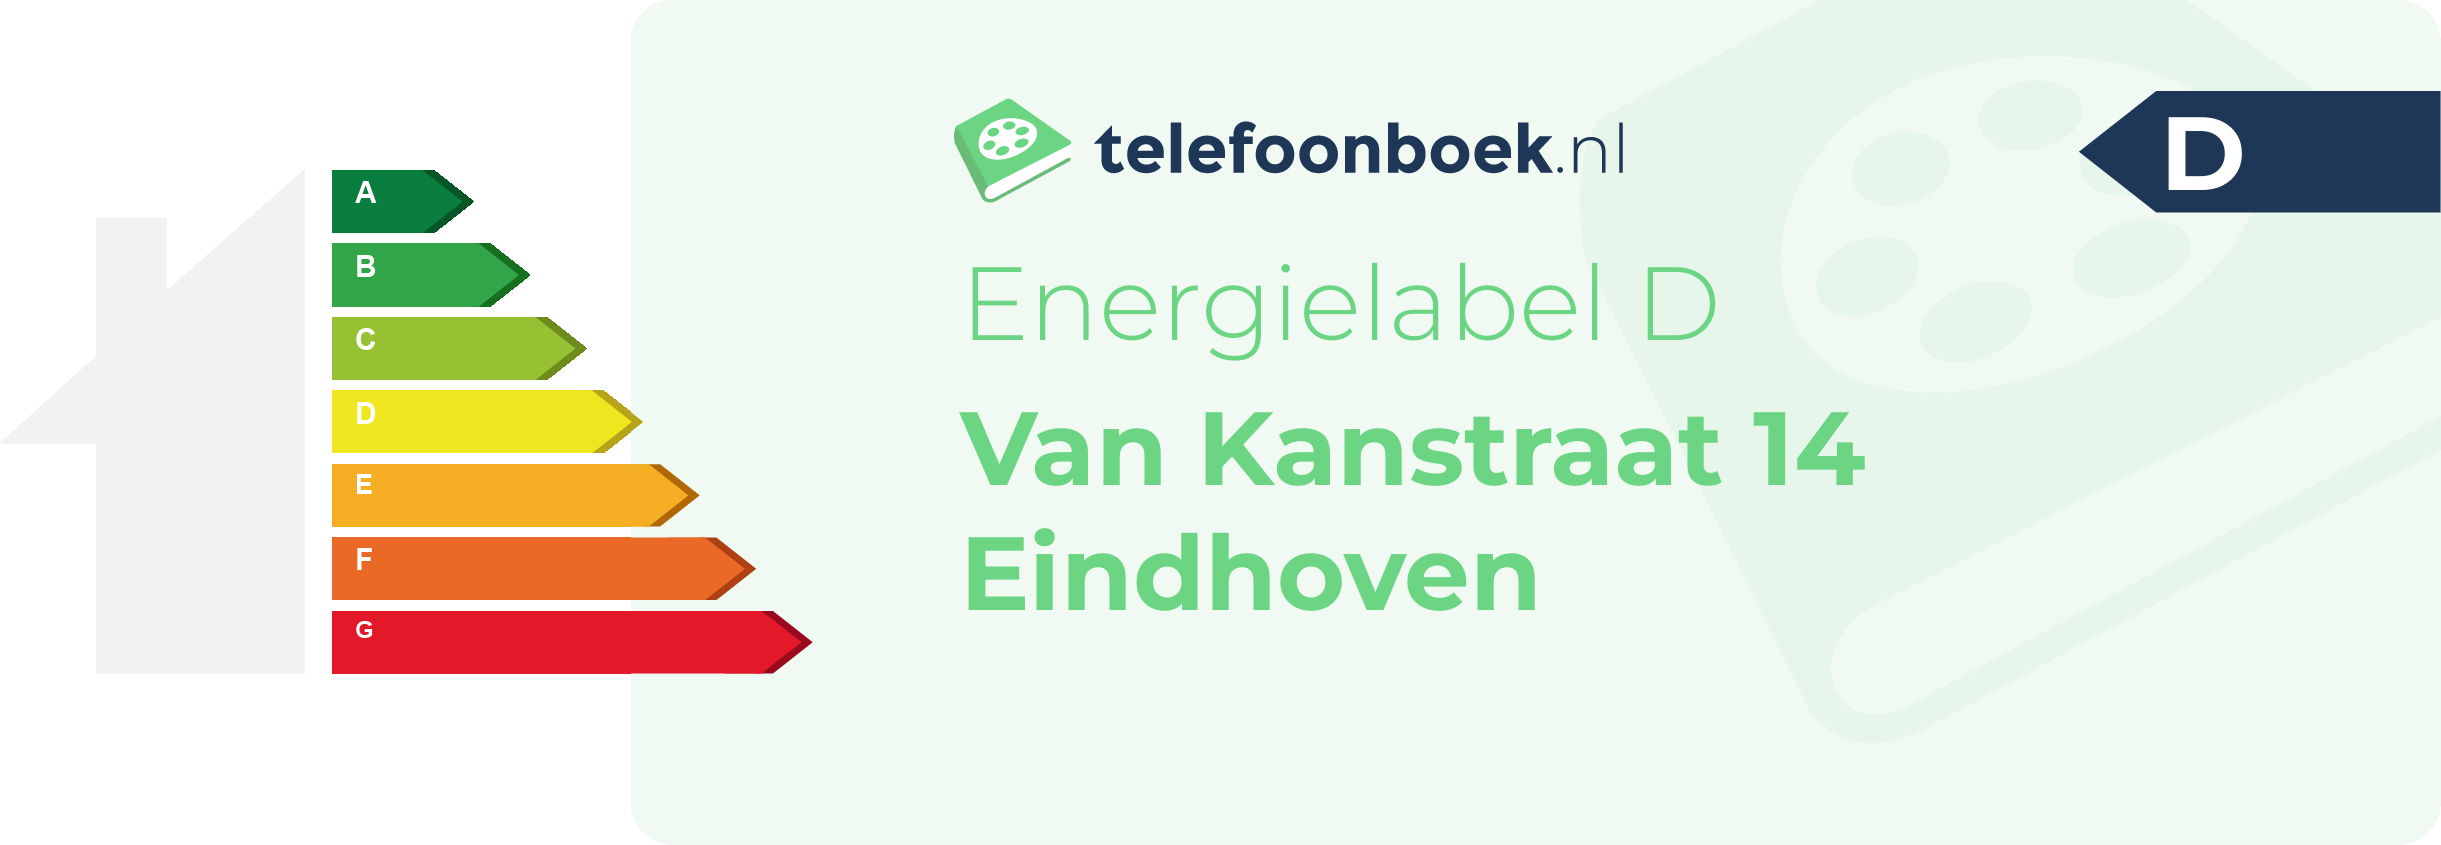 Energielabel Van Kanstraat 14 Eindhoven